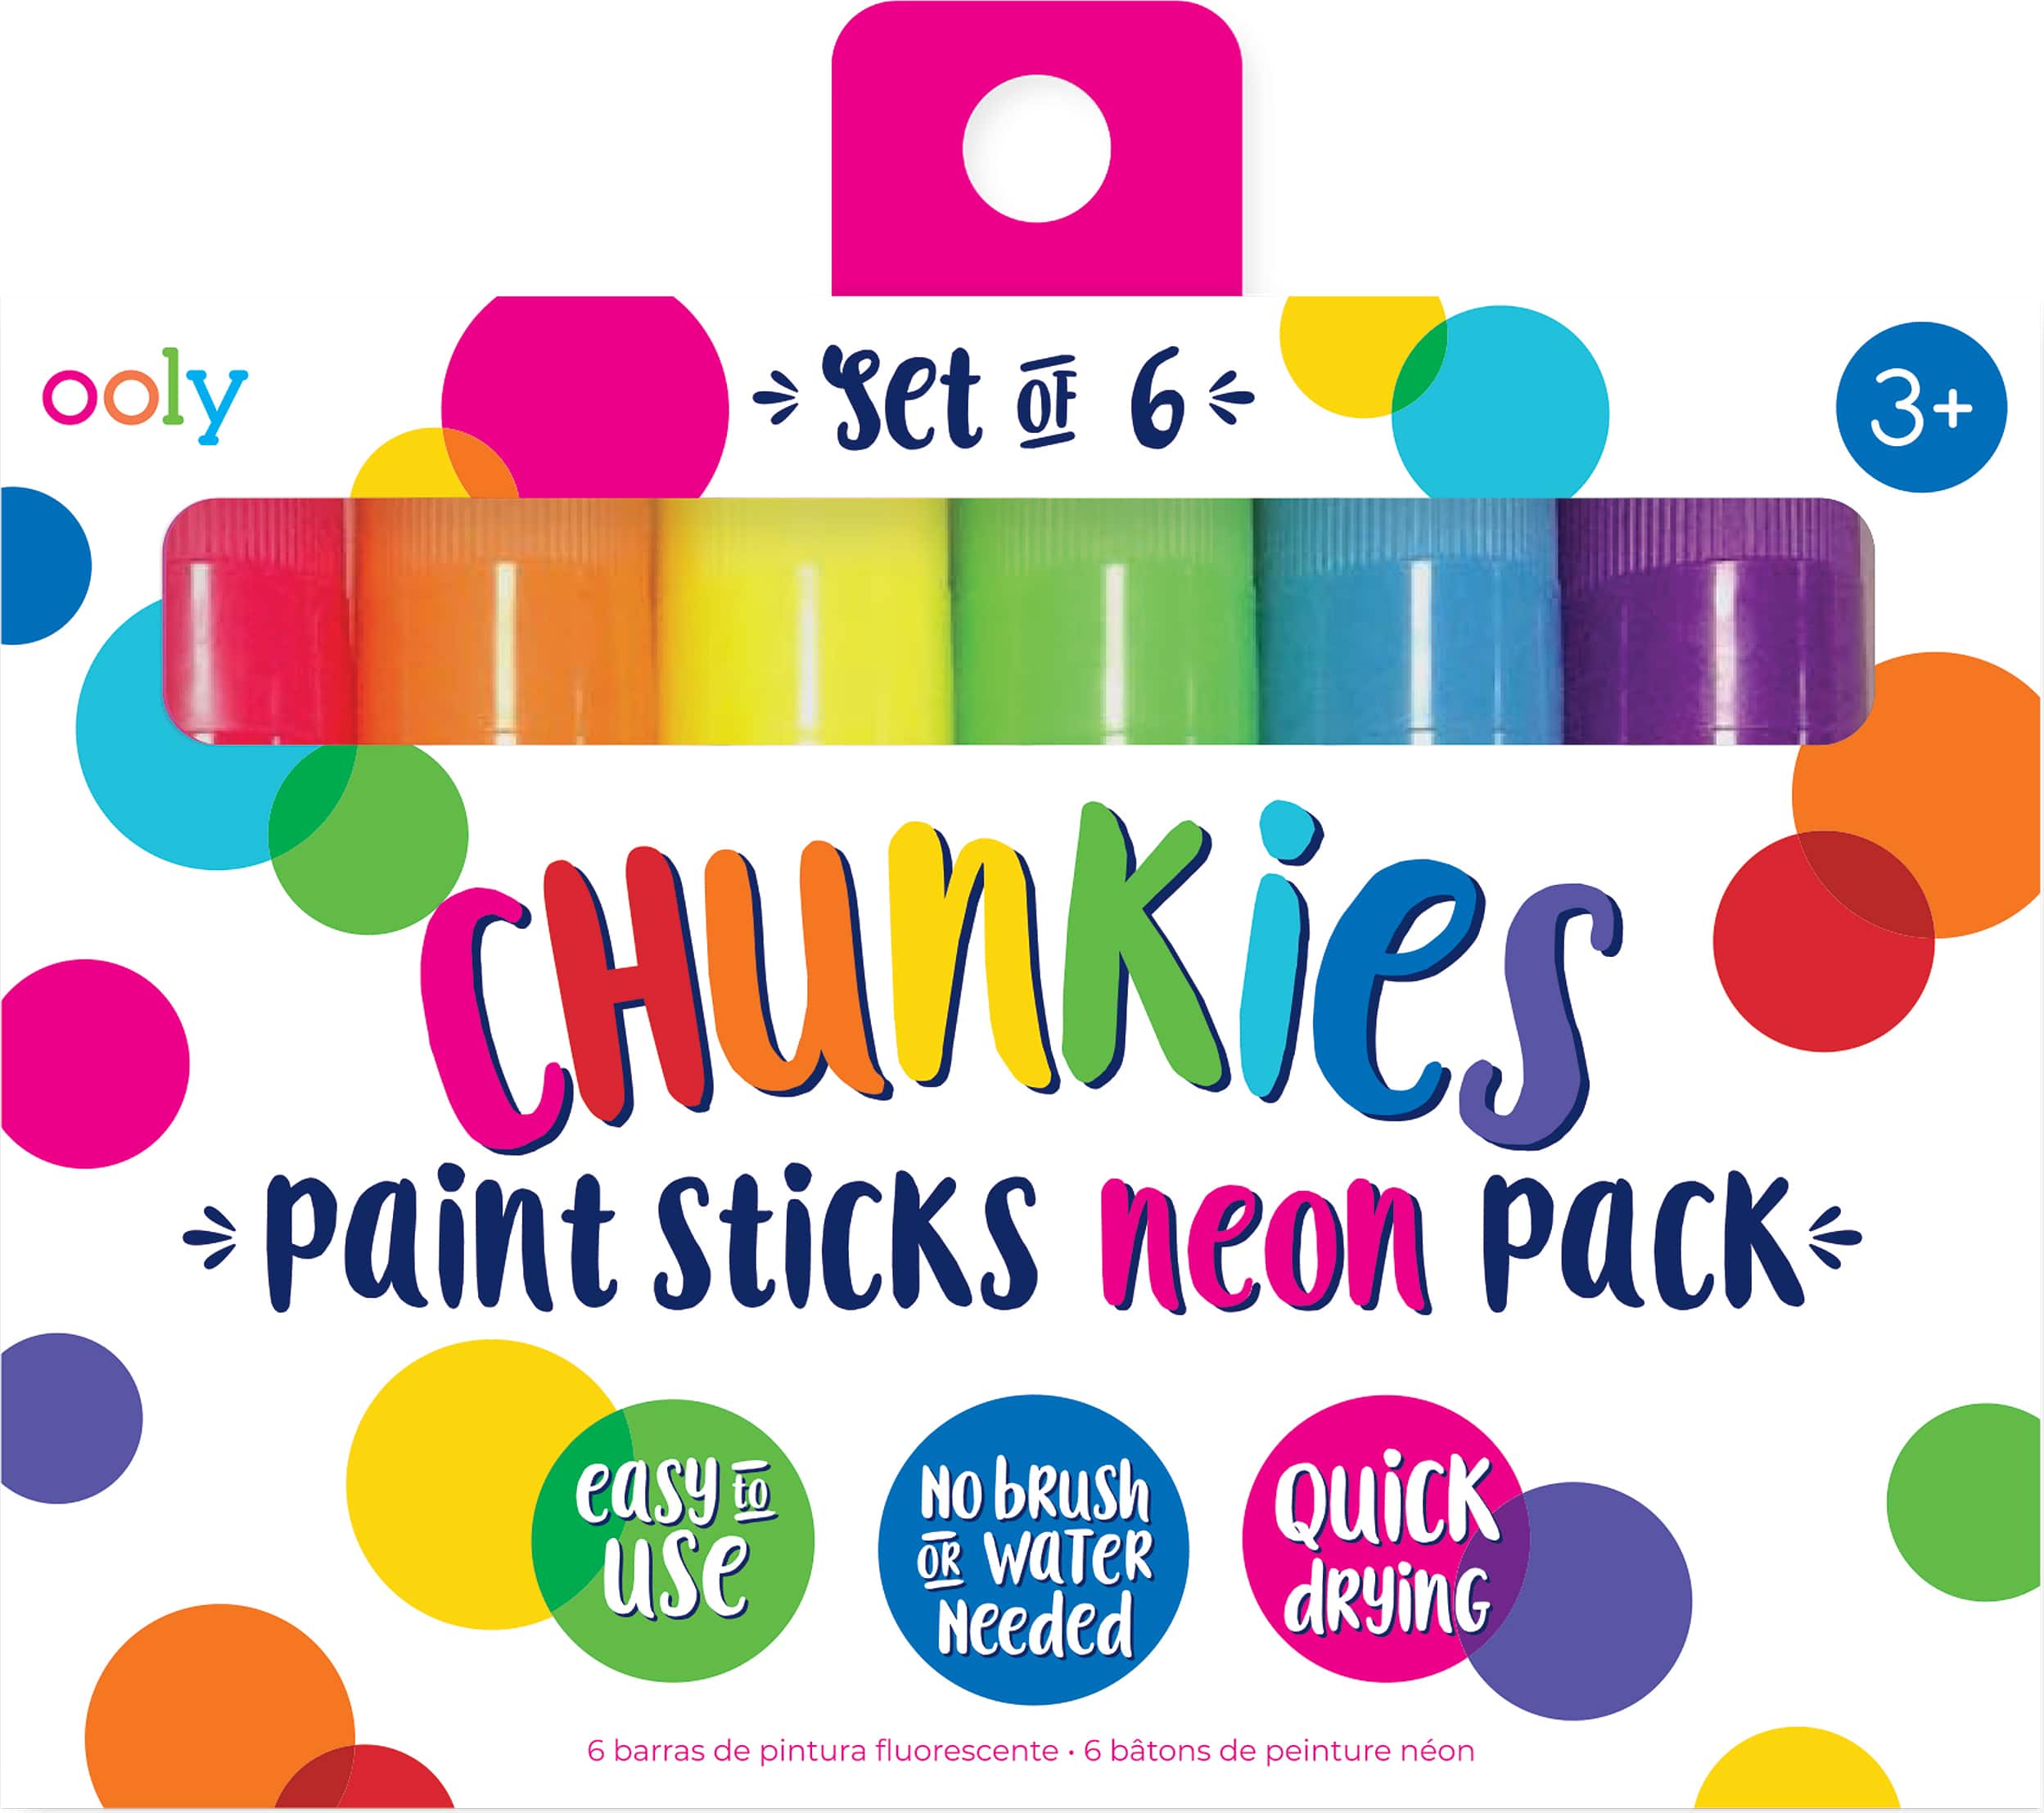 OOLY Chunkies Neon Paint Sticks, 6ct.